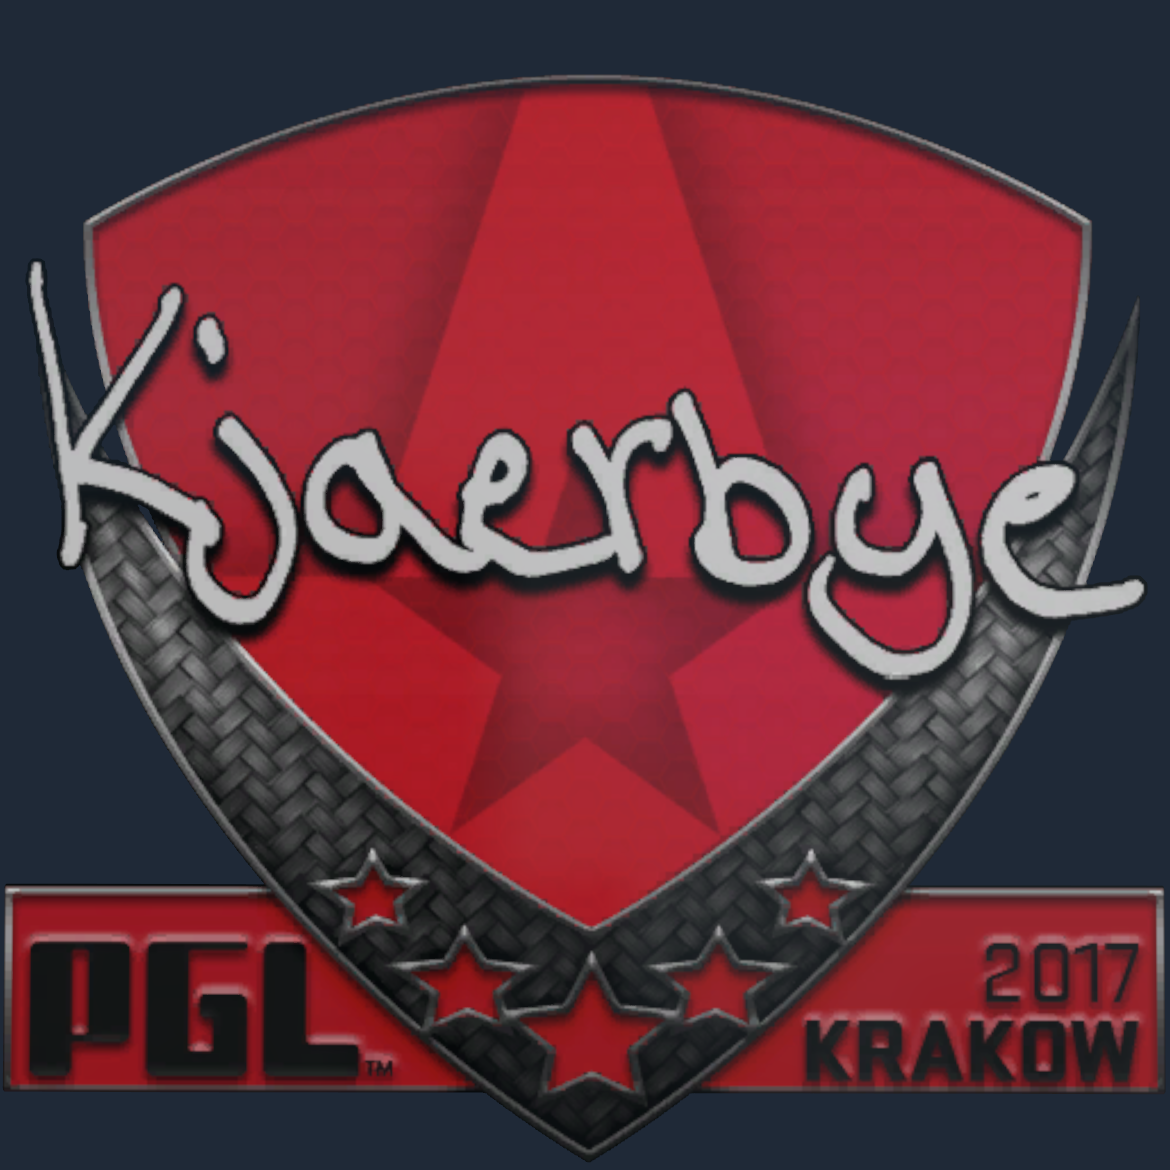 Sticker | Kjaerbye | Krakow 2017 Screenshot